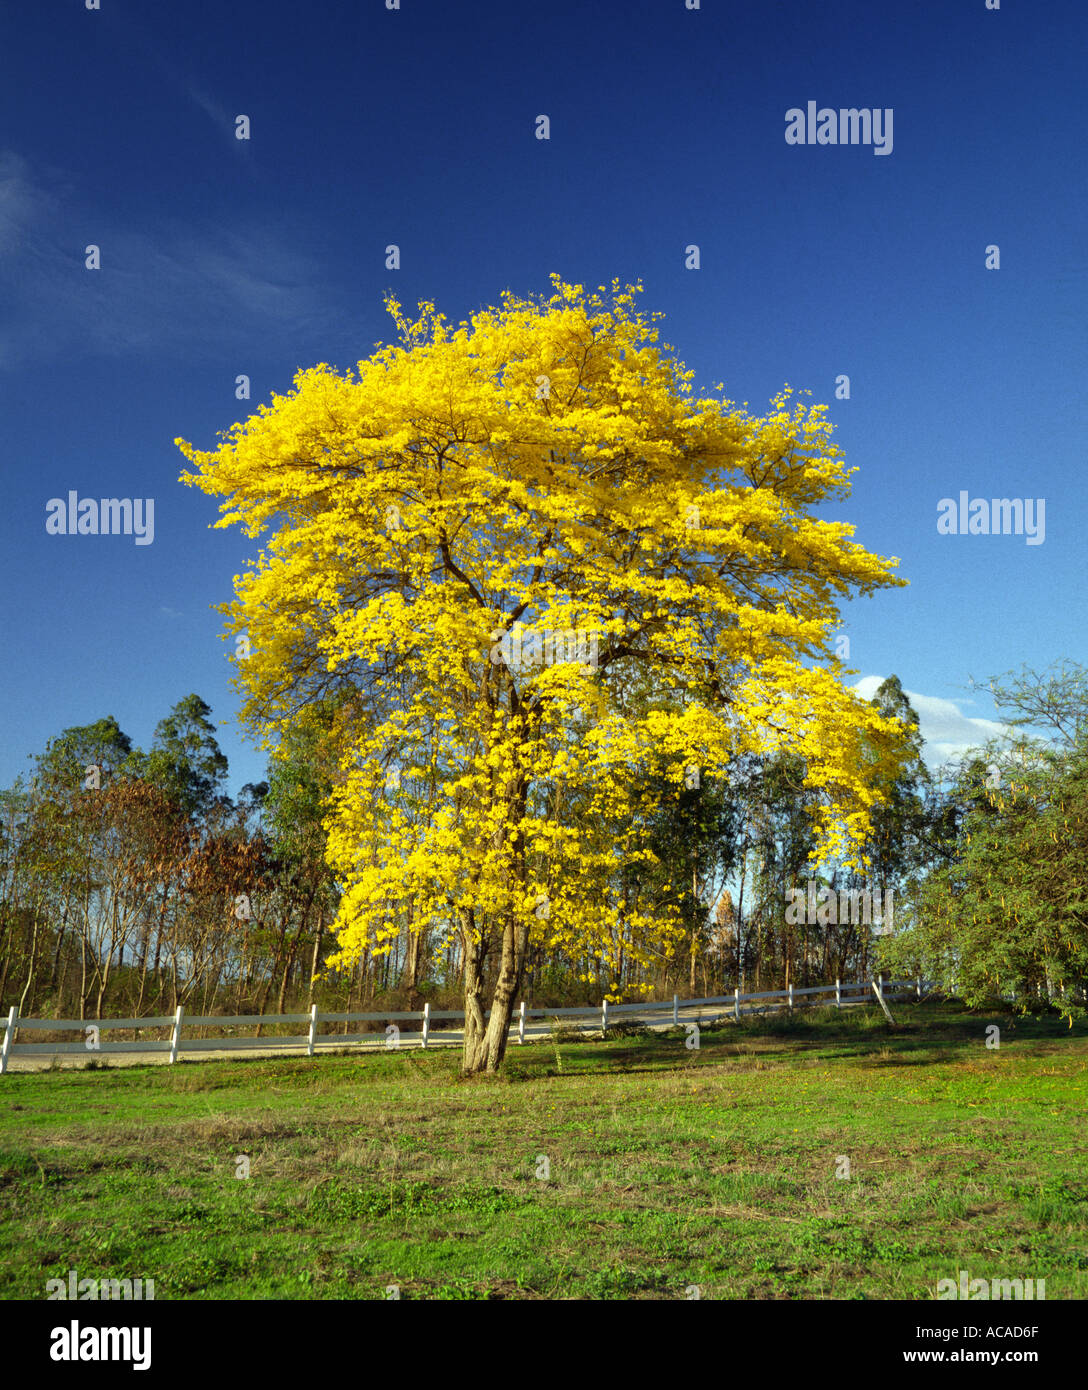 Landscape yellow flowers on guayacan Tabebuia chrysantha tree against blue sky Ecuador South America Stock Photo